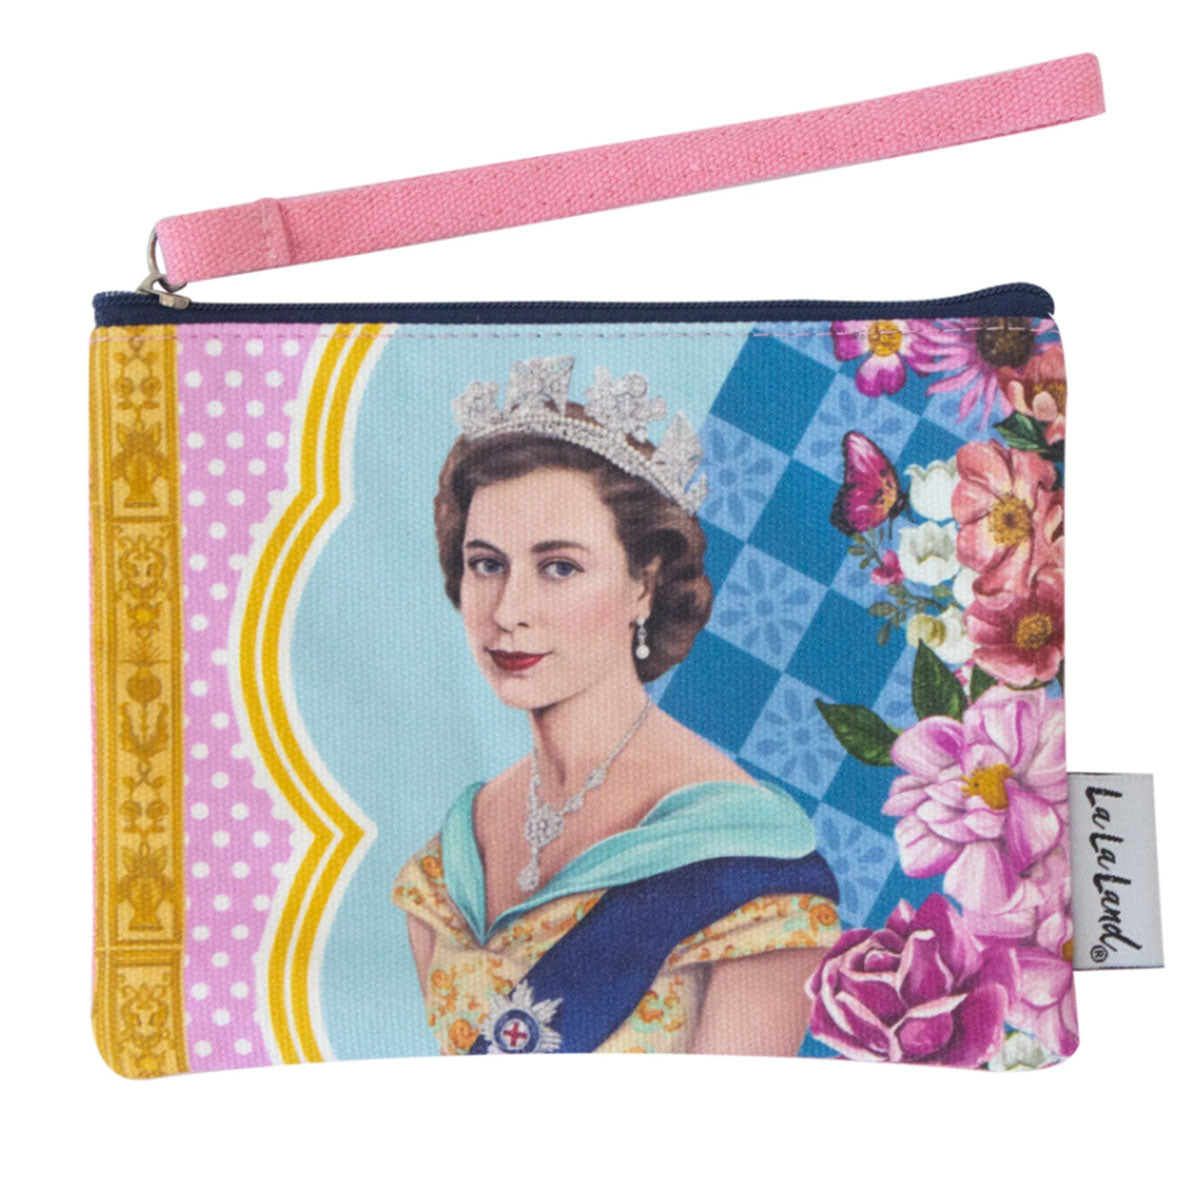 Handbag sales skyrocket, inspired by Queen Elizabeth | Handbags on sale, Queen  elizabeth, Elizabeth